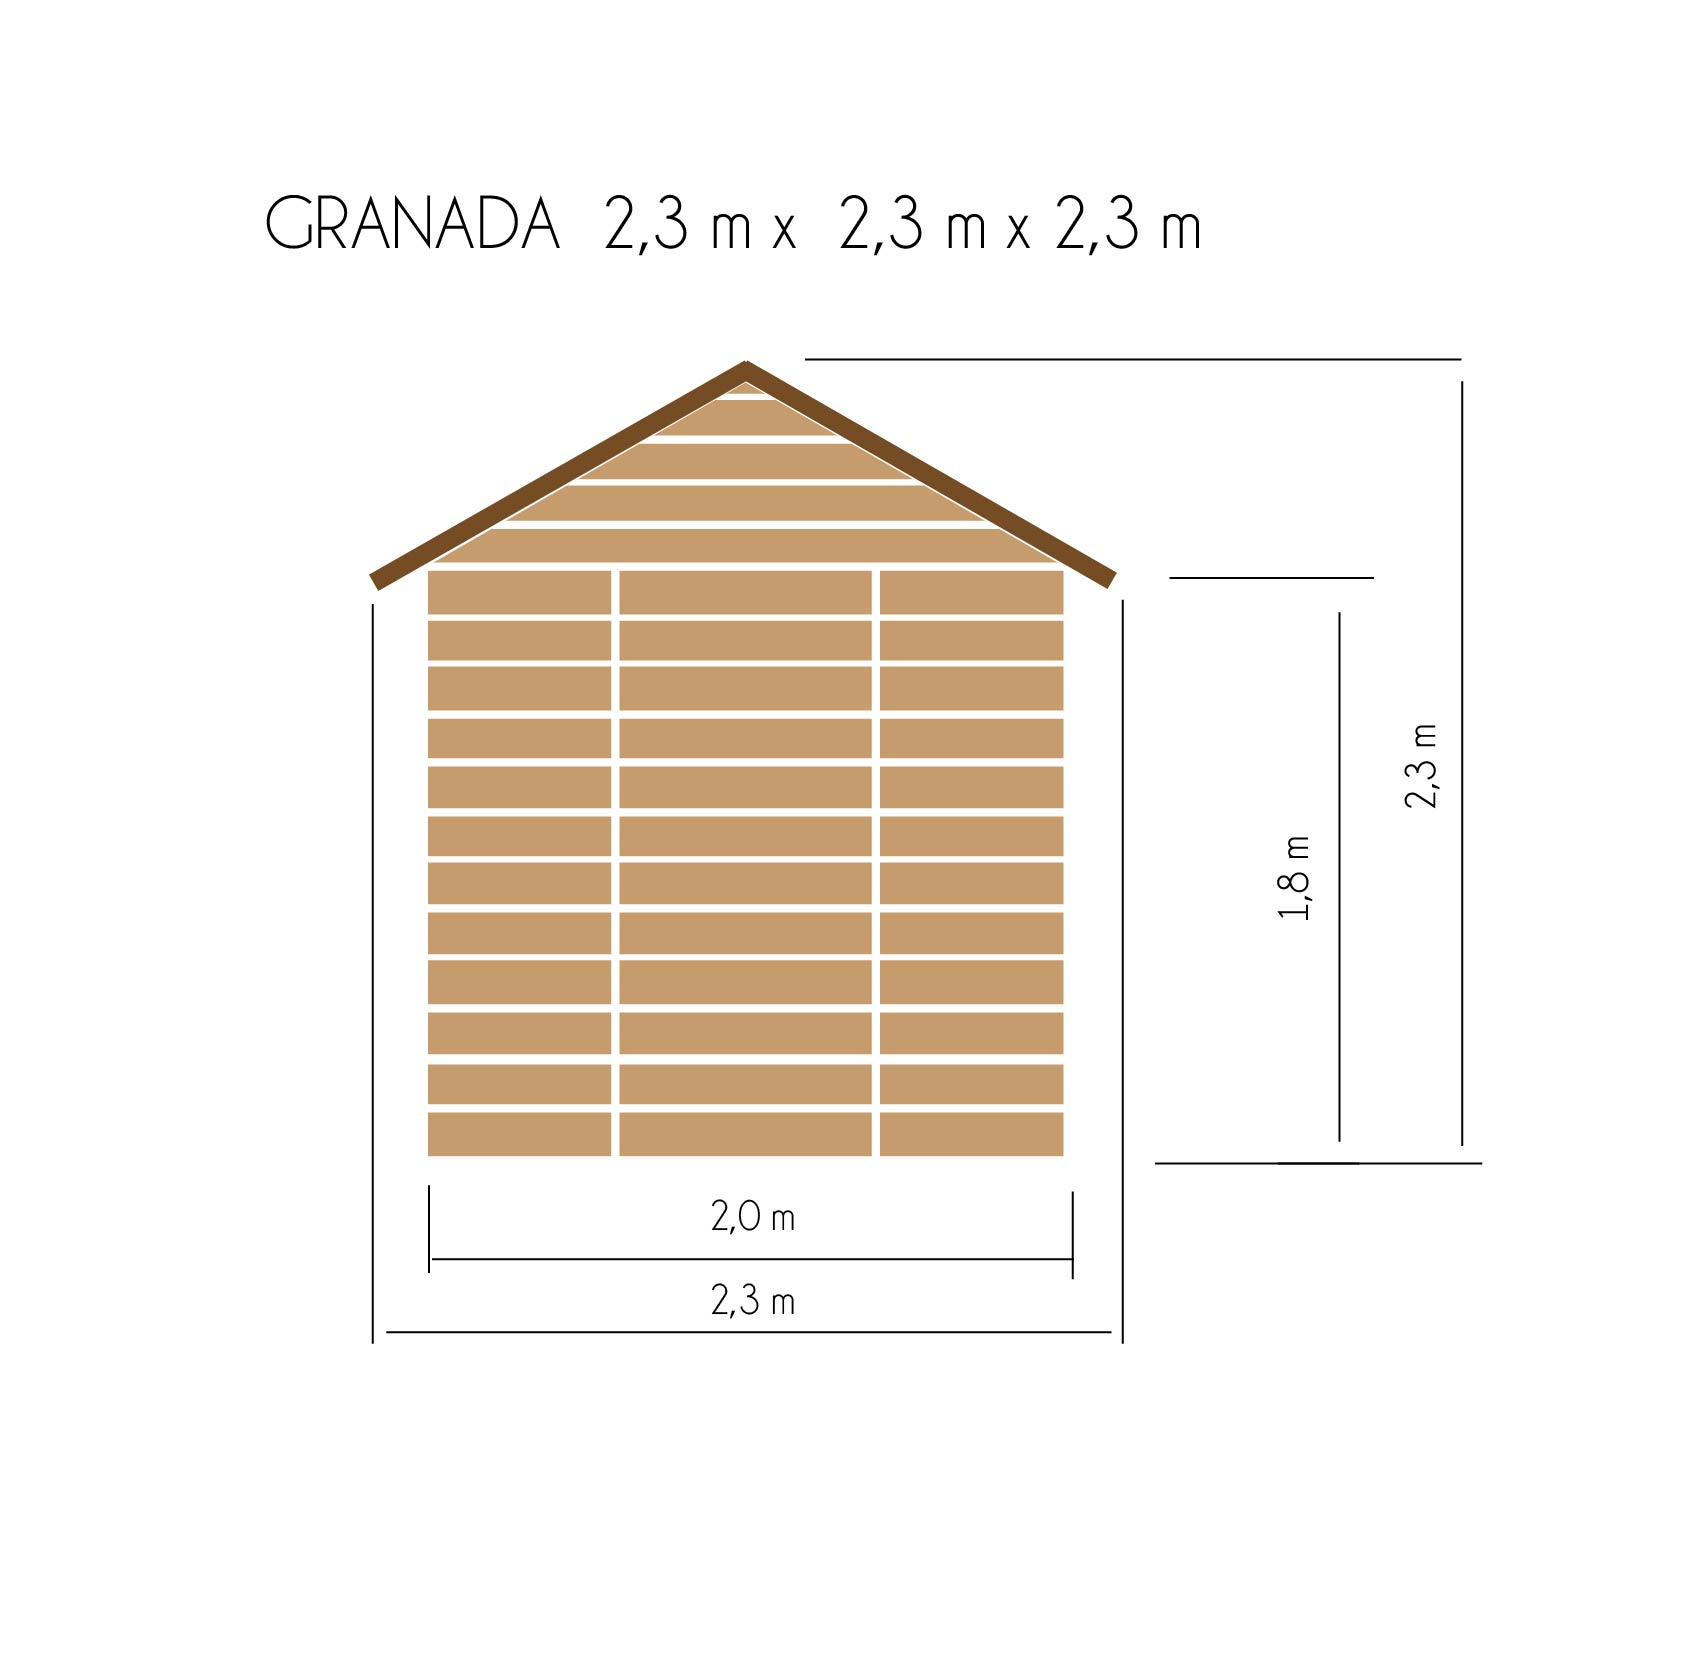 Casetas de jardín hasta 4 m2, Caseta de jardín 2,3x2,3m, (19mm), GRANADA